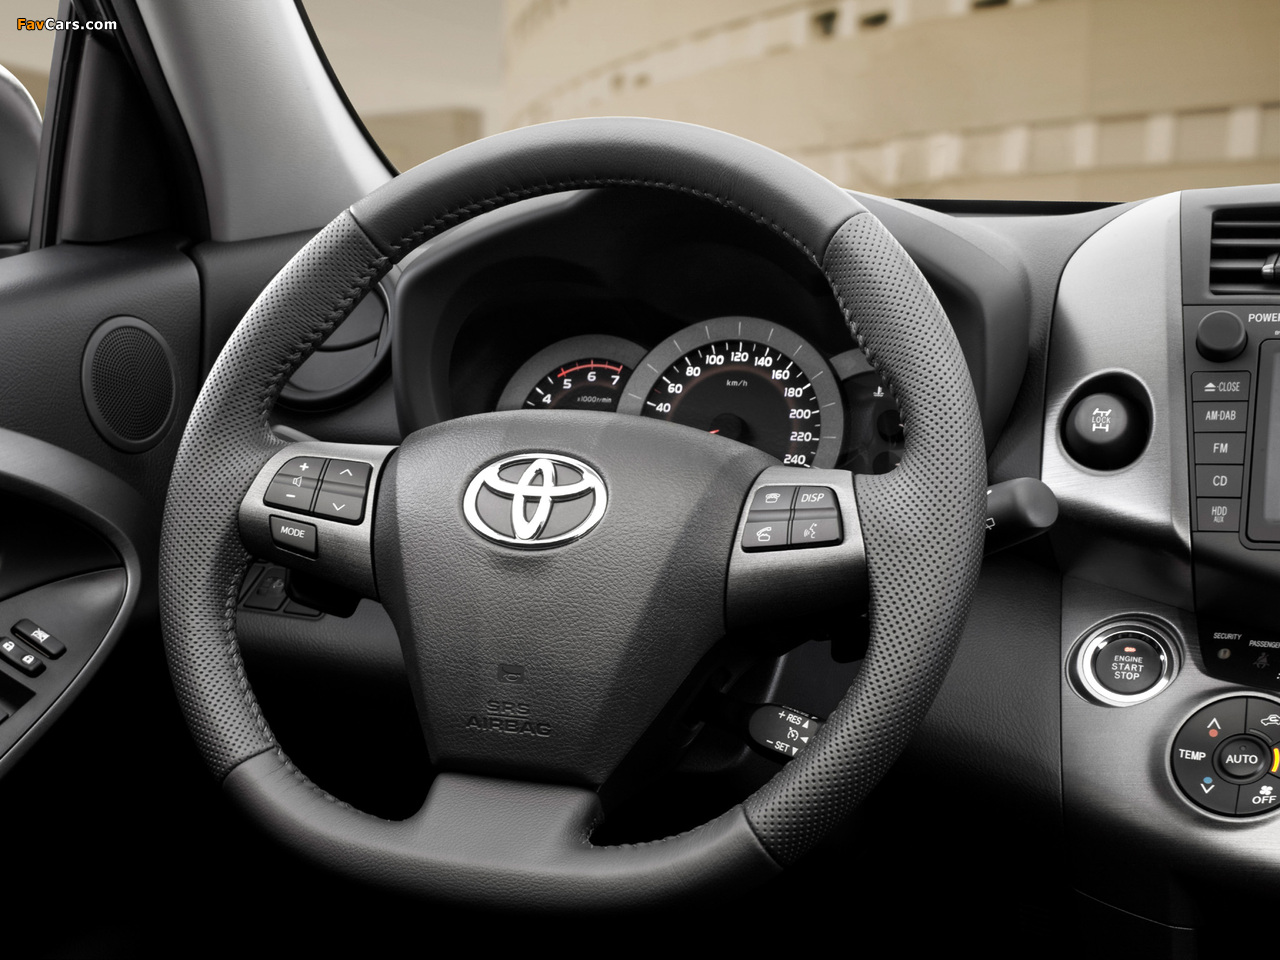 Toyota RAV4 2010 images (1280 x 960)